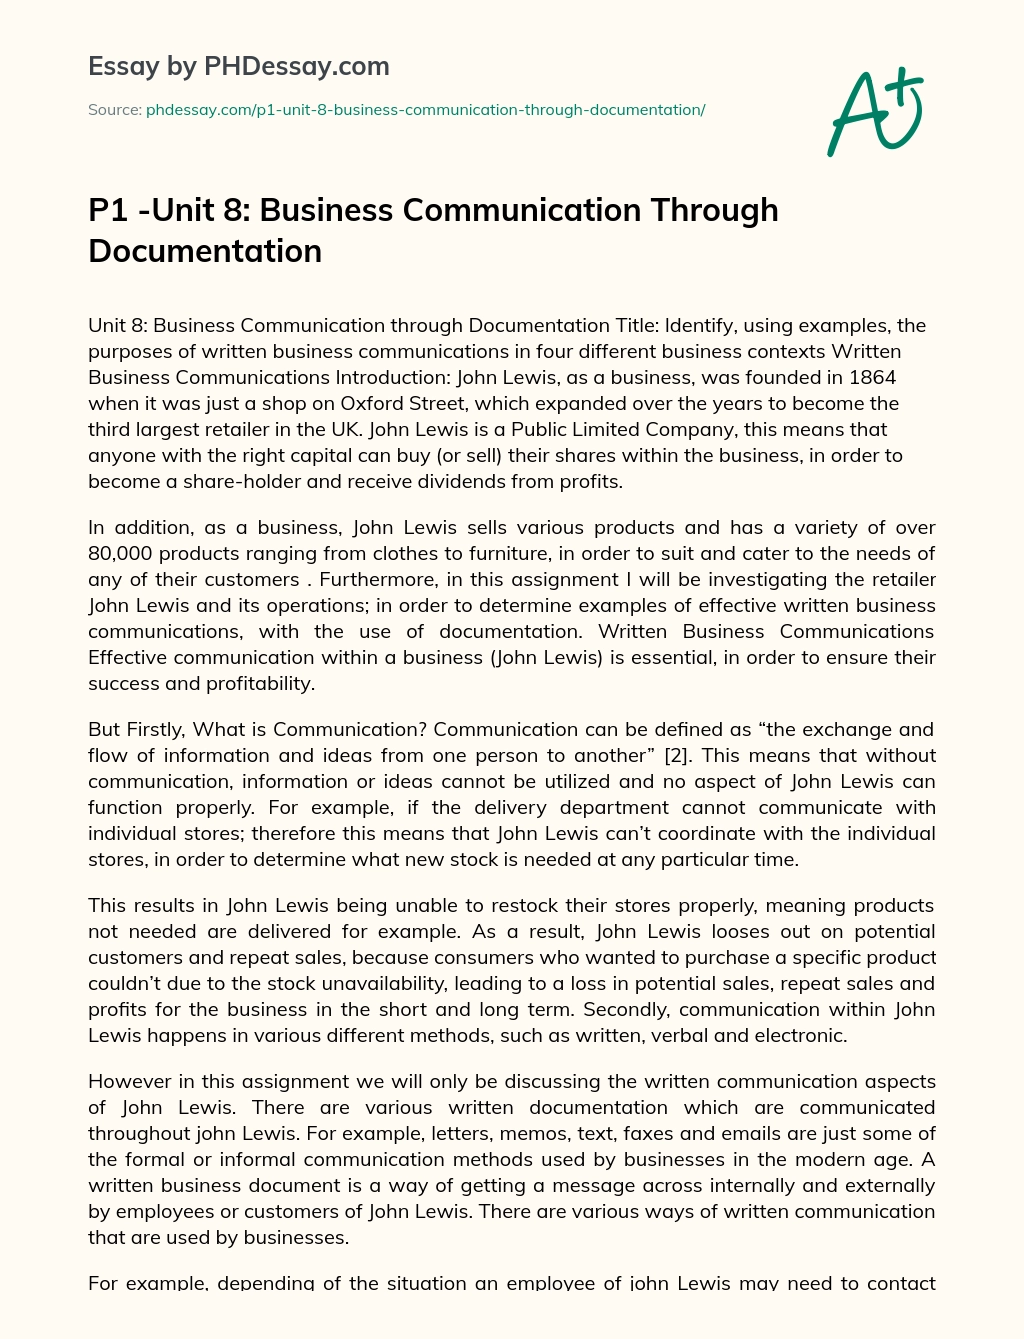 P1 -Unit 8: Business Communication Through Documentation essay